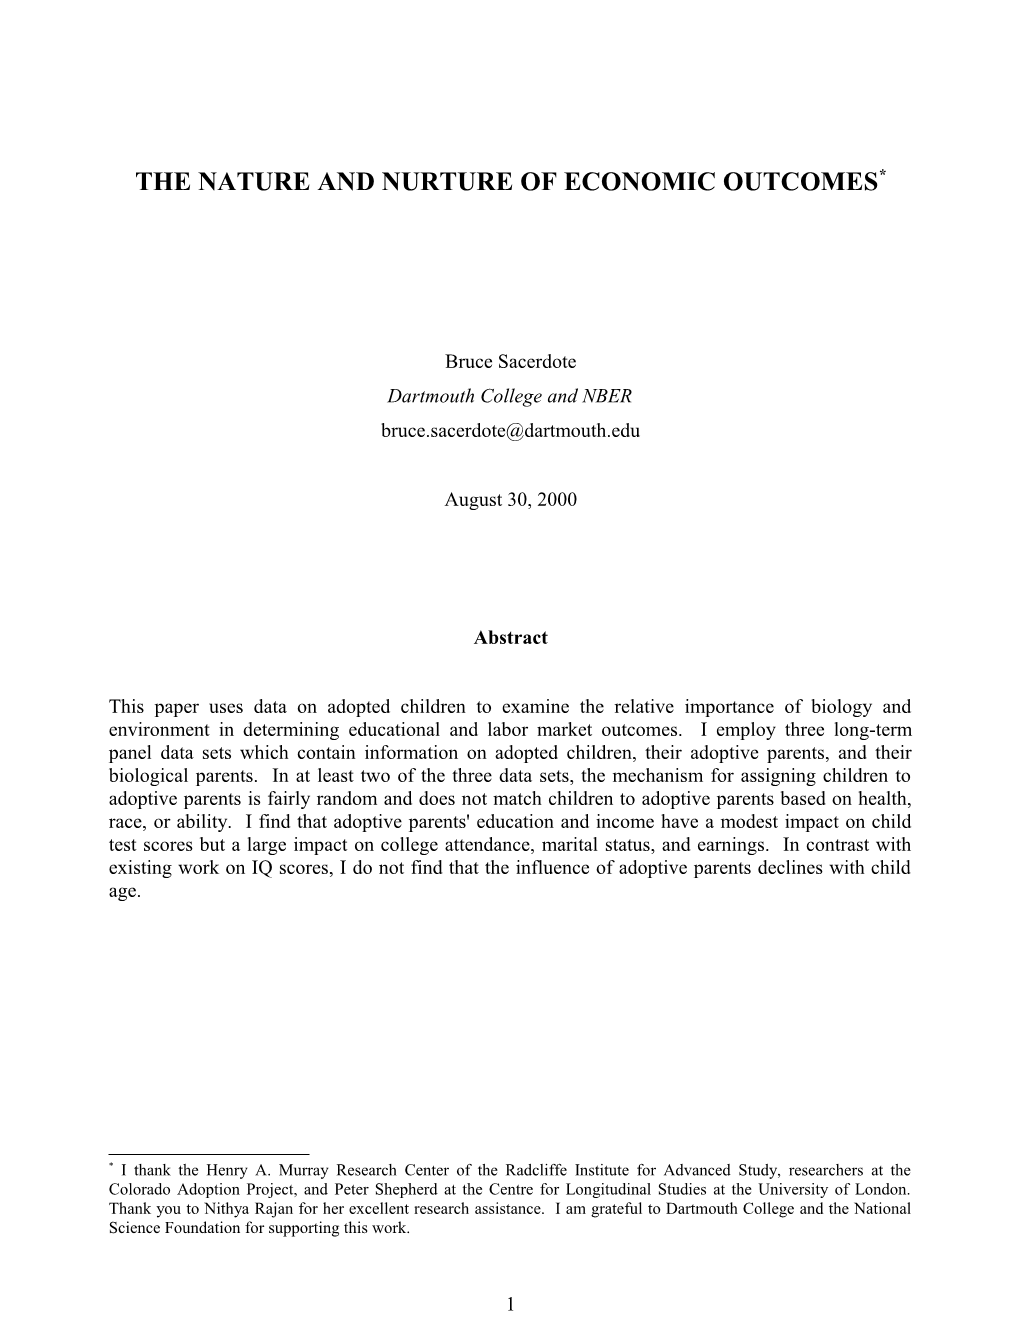 The Nature and Nurture of Economic Outcomes *